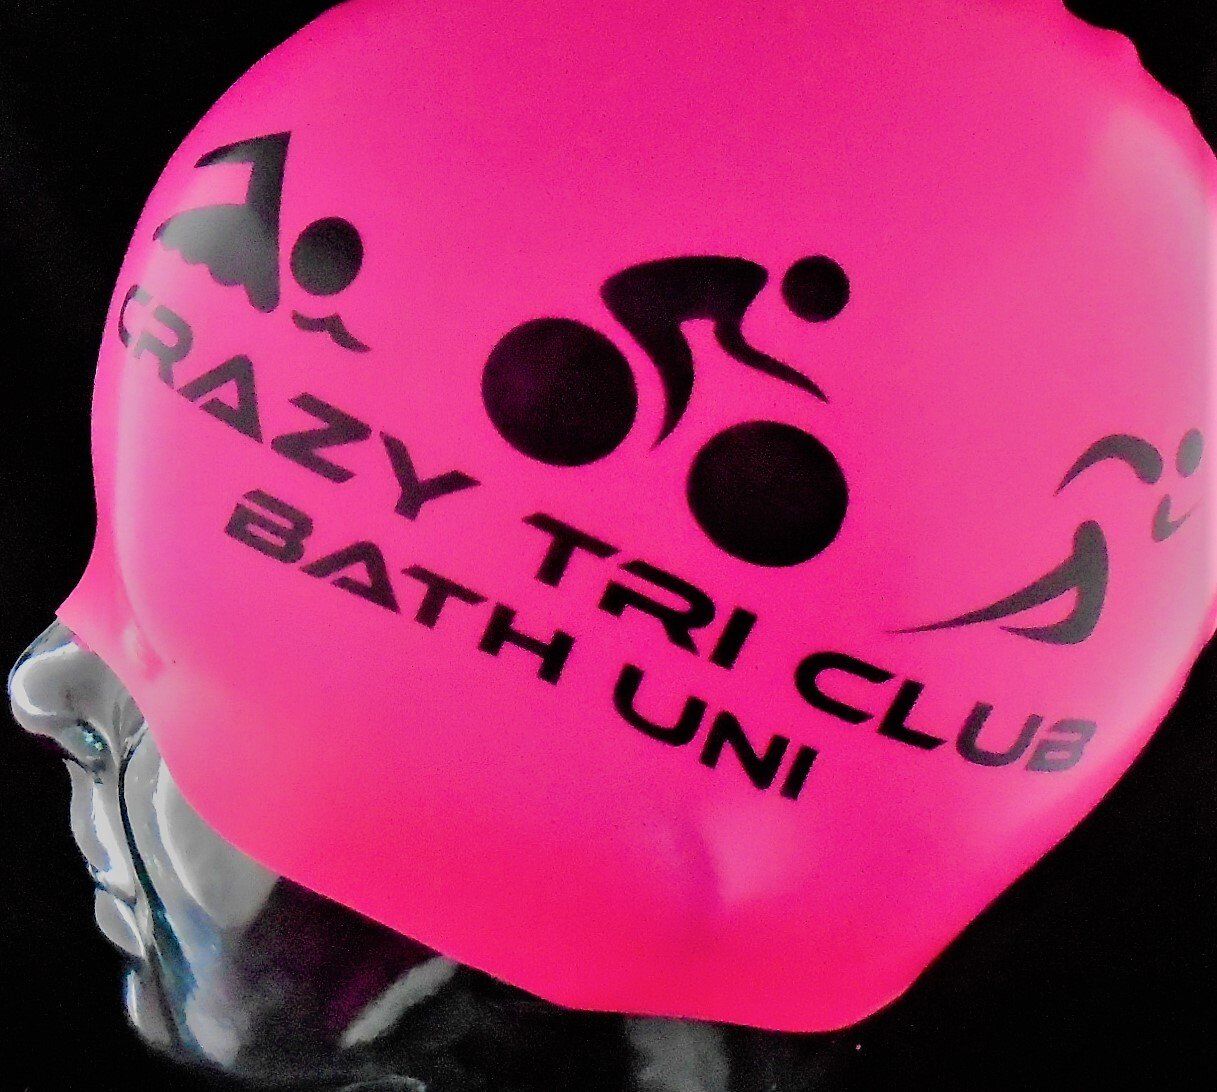 A pink swim cap that says crazy tri club bath uni